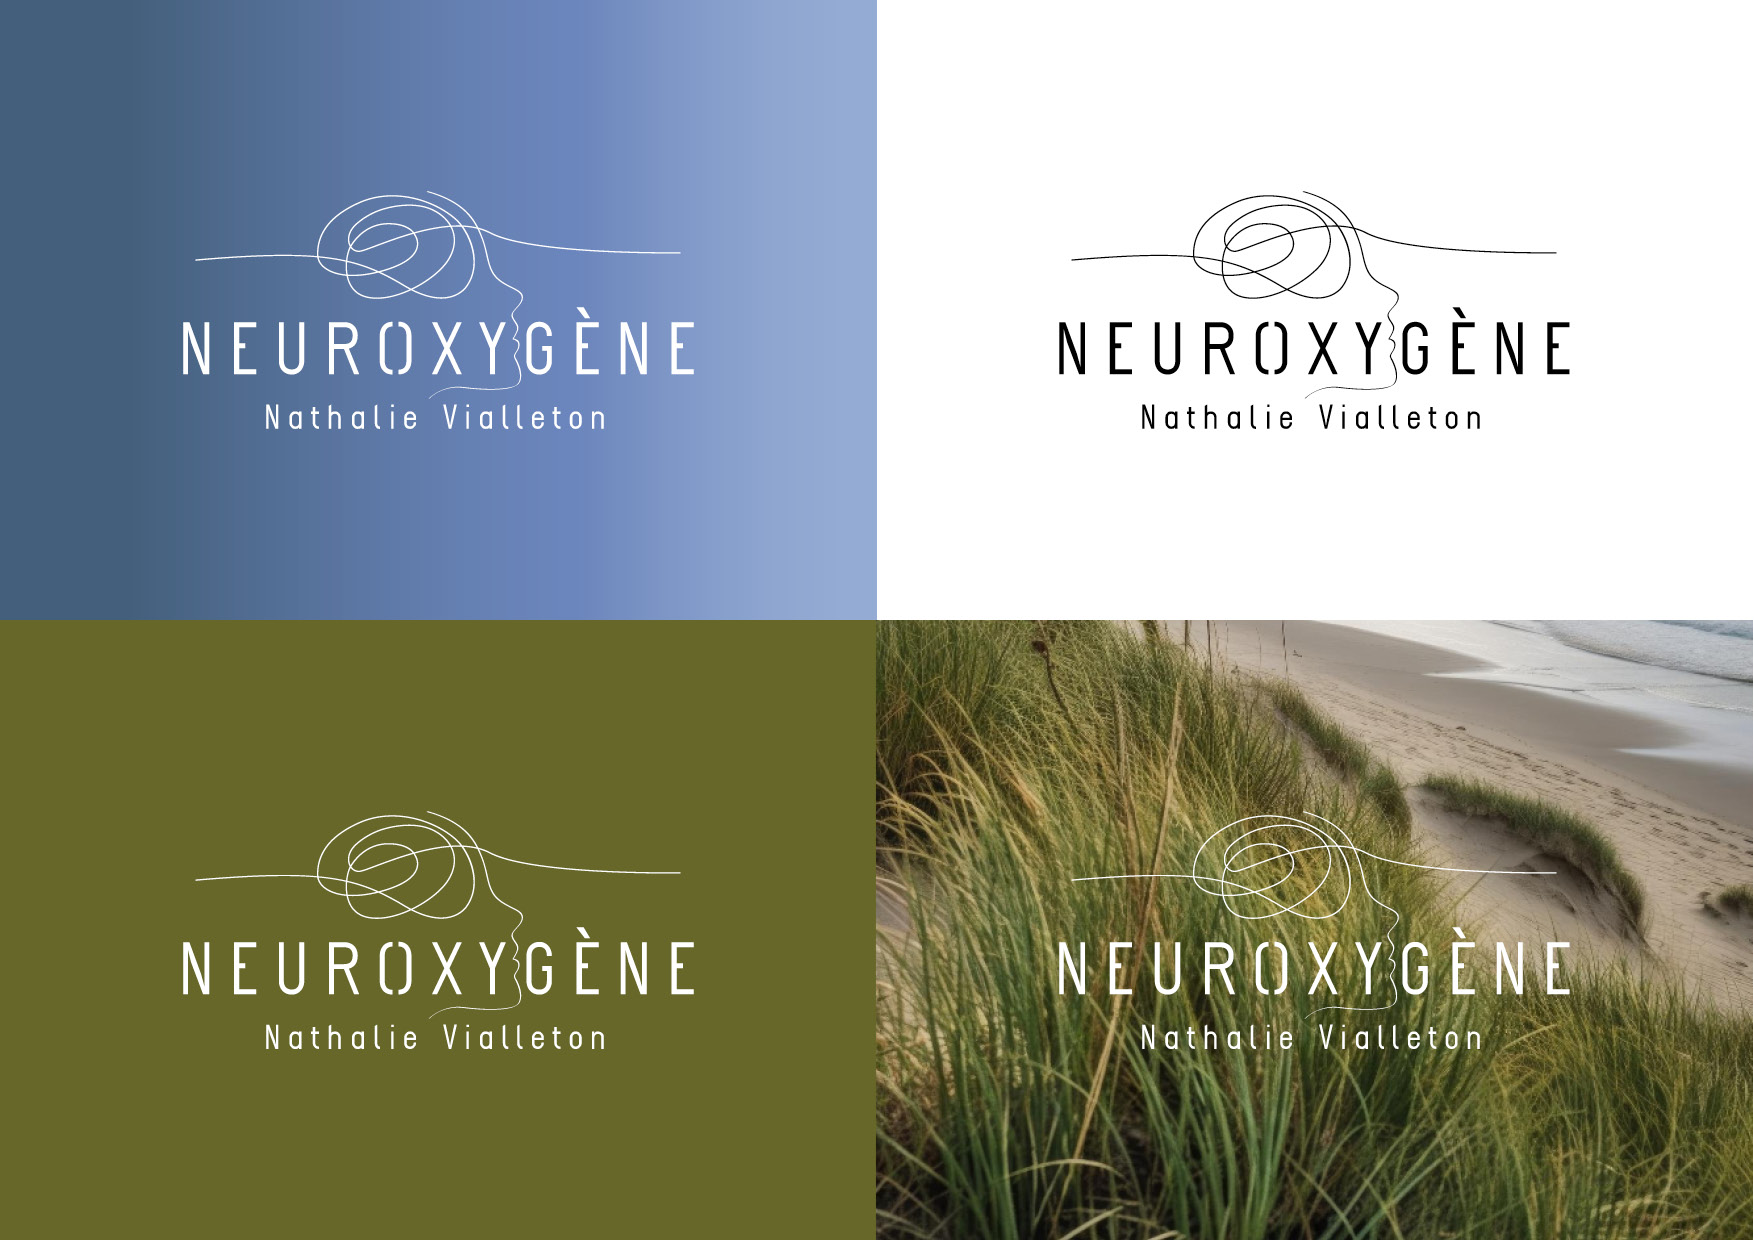 quatre visuels du logo neuroxygene vert bleu blanc et photo